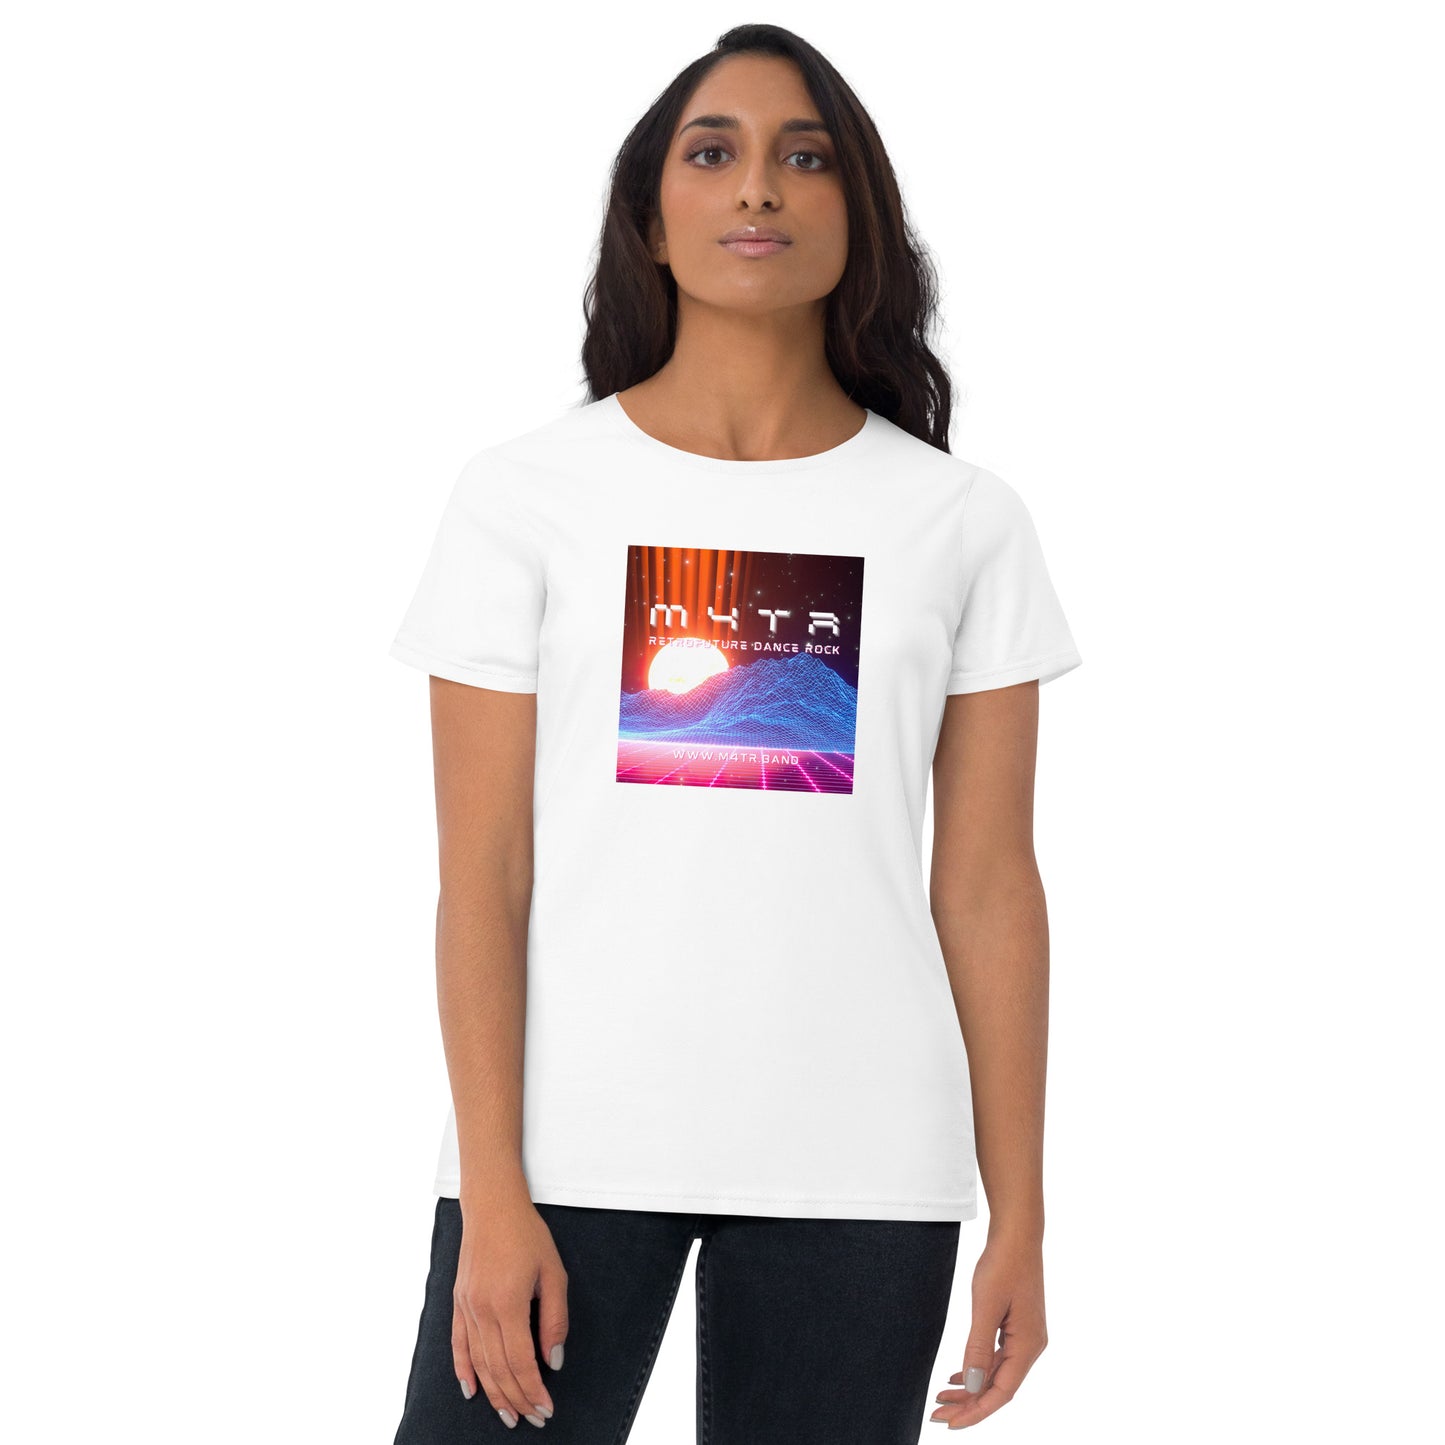 Women's short sleeve t-shirt (Synthwave Sunrise)